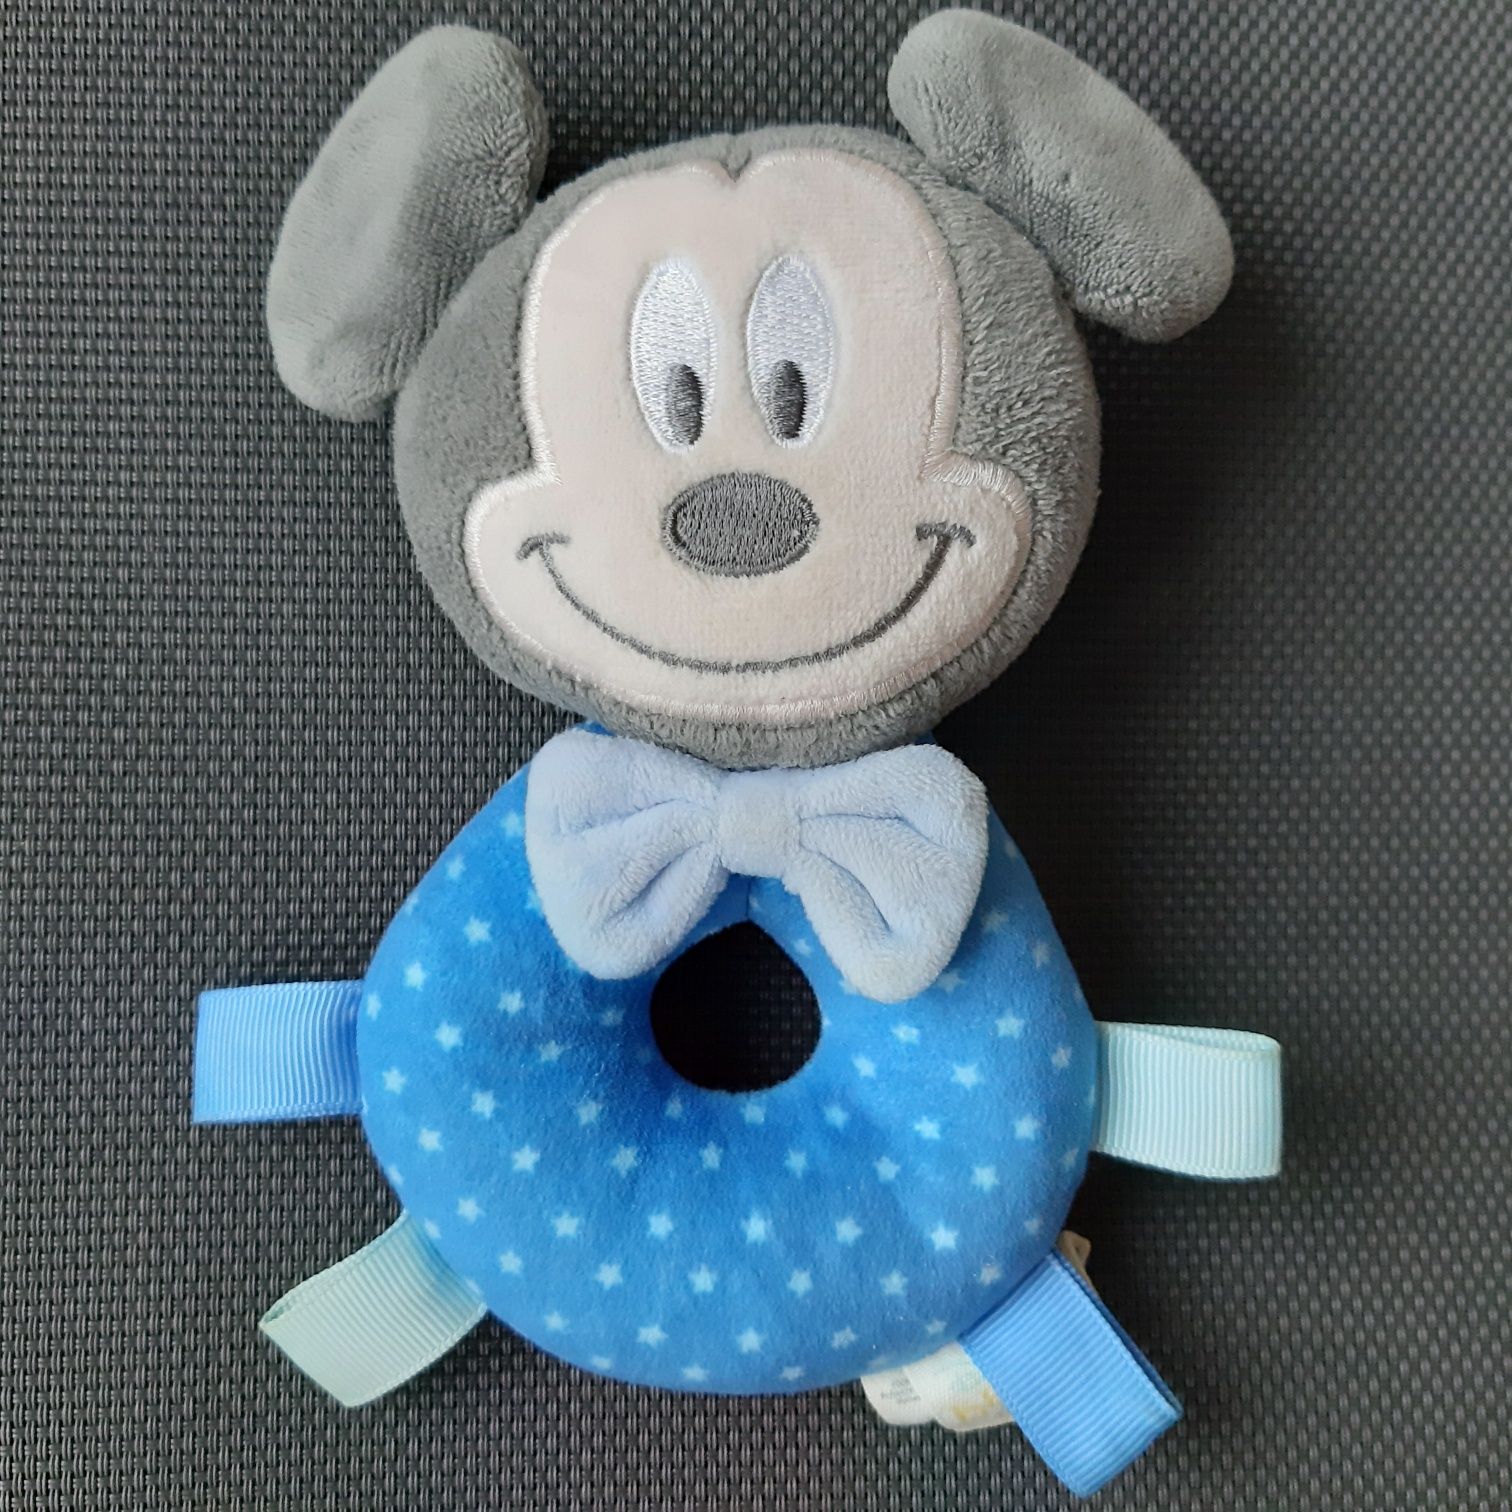 Grzechotka Mickey Mouse miękka delikatna zabawka wygodna lekka Disney